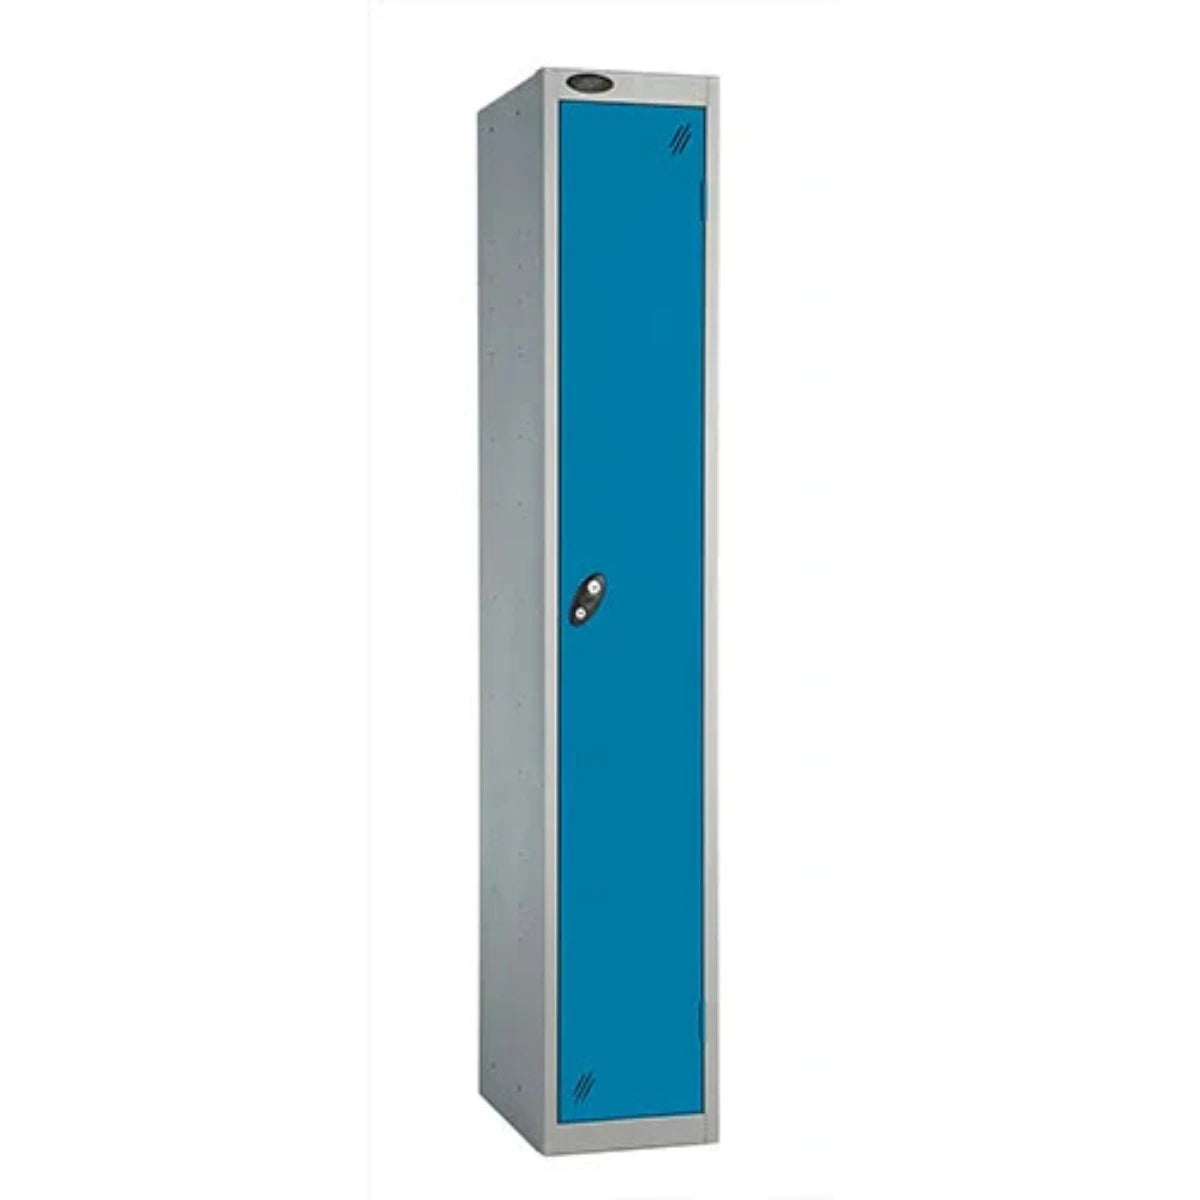 NEW Probe 1 door personal lockers cw keys 1780Hx305Wx460D BLUE and GREY